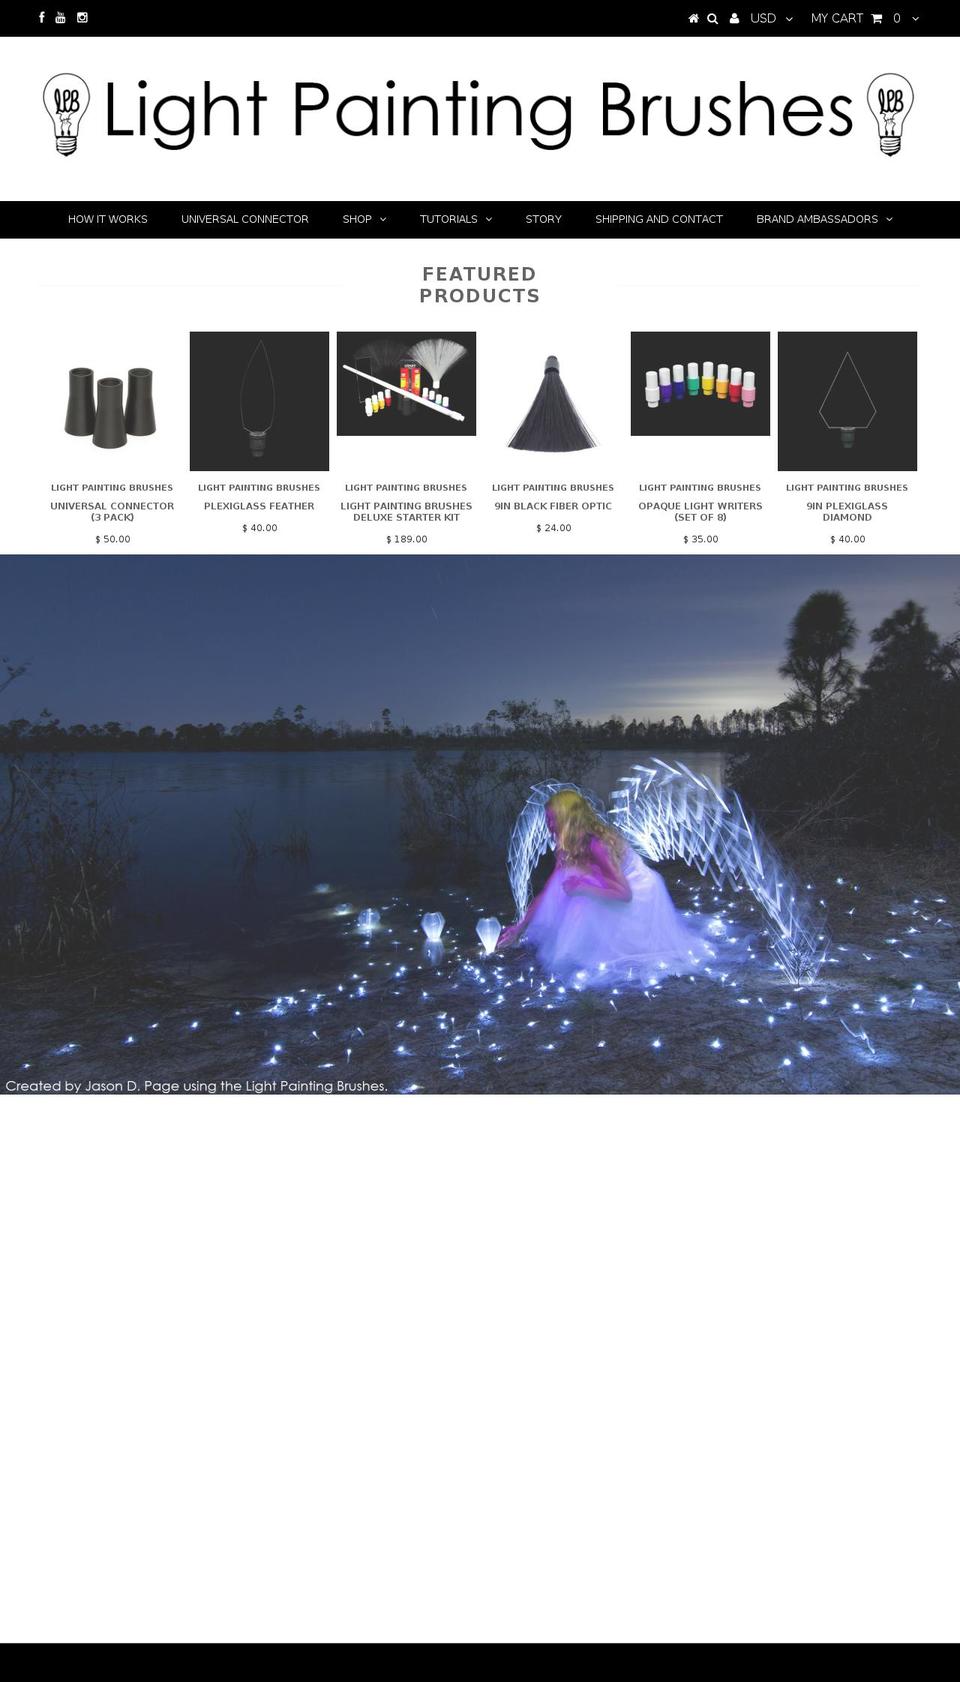 lightpaintingbrushes.com shopify website screenshot